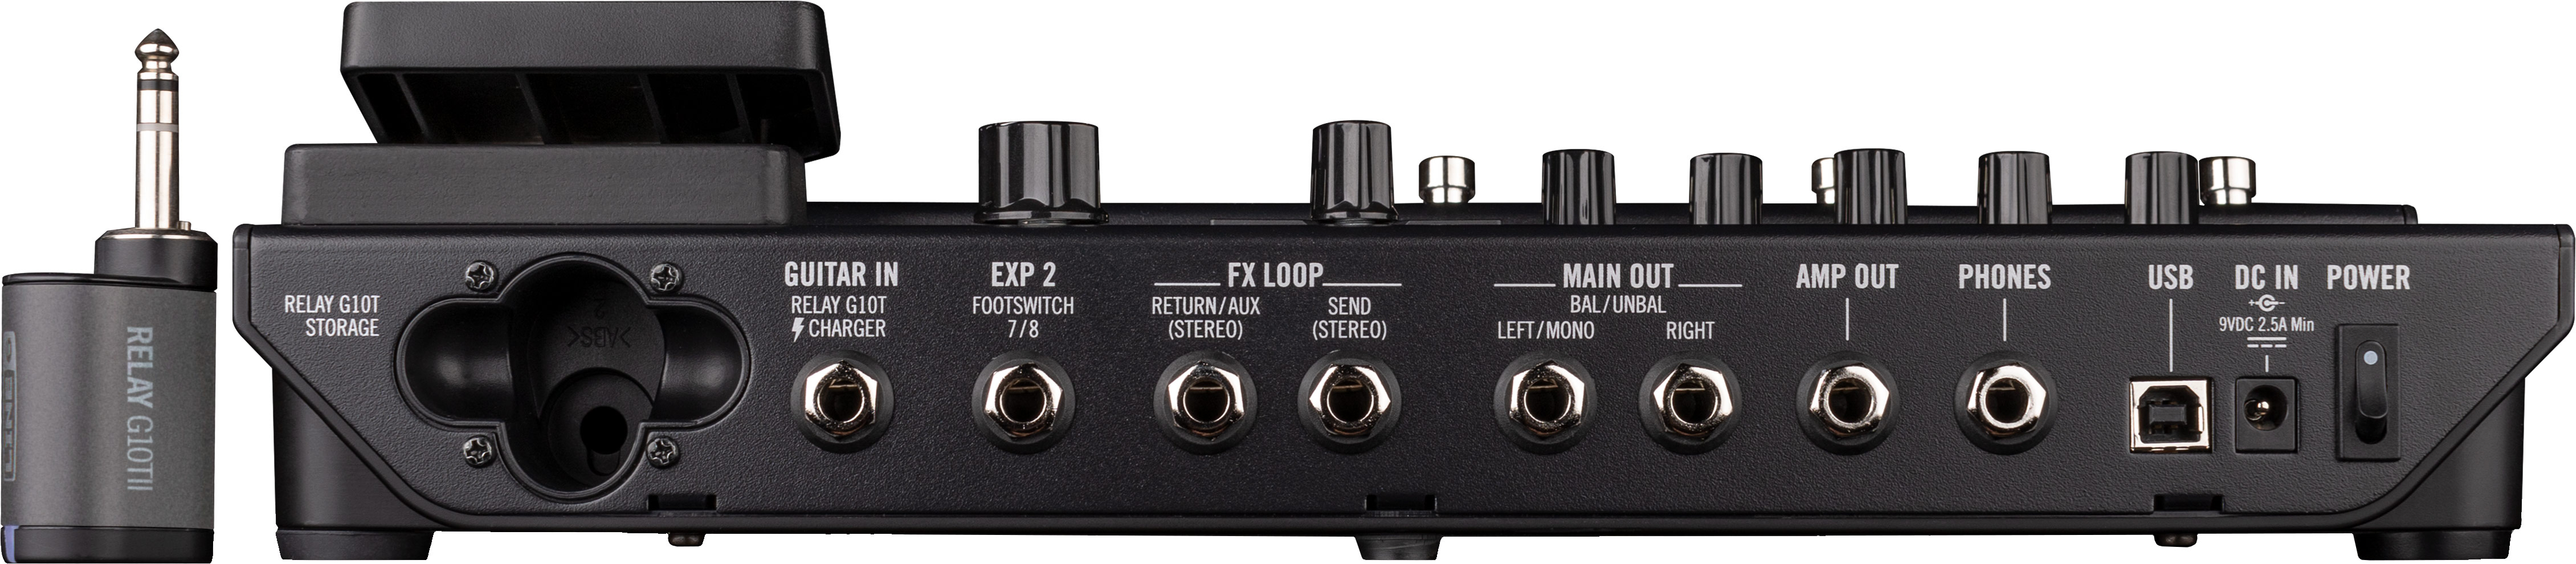 Line 6 POD Go Wireless Guitar Amp Modeller and Multi Effects